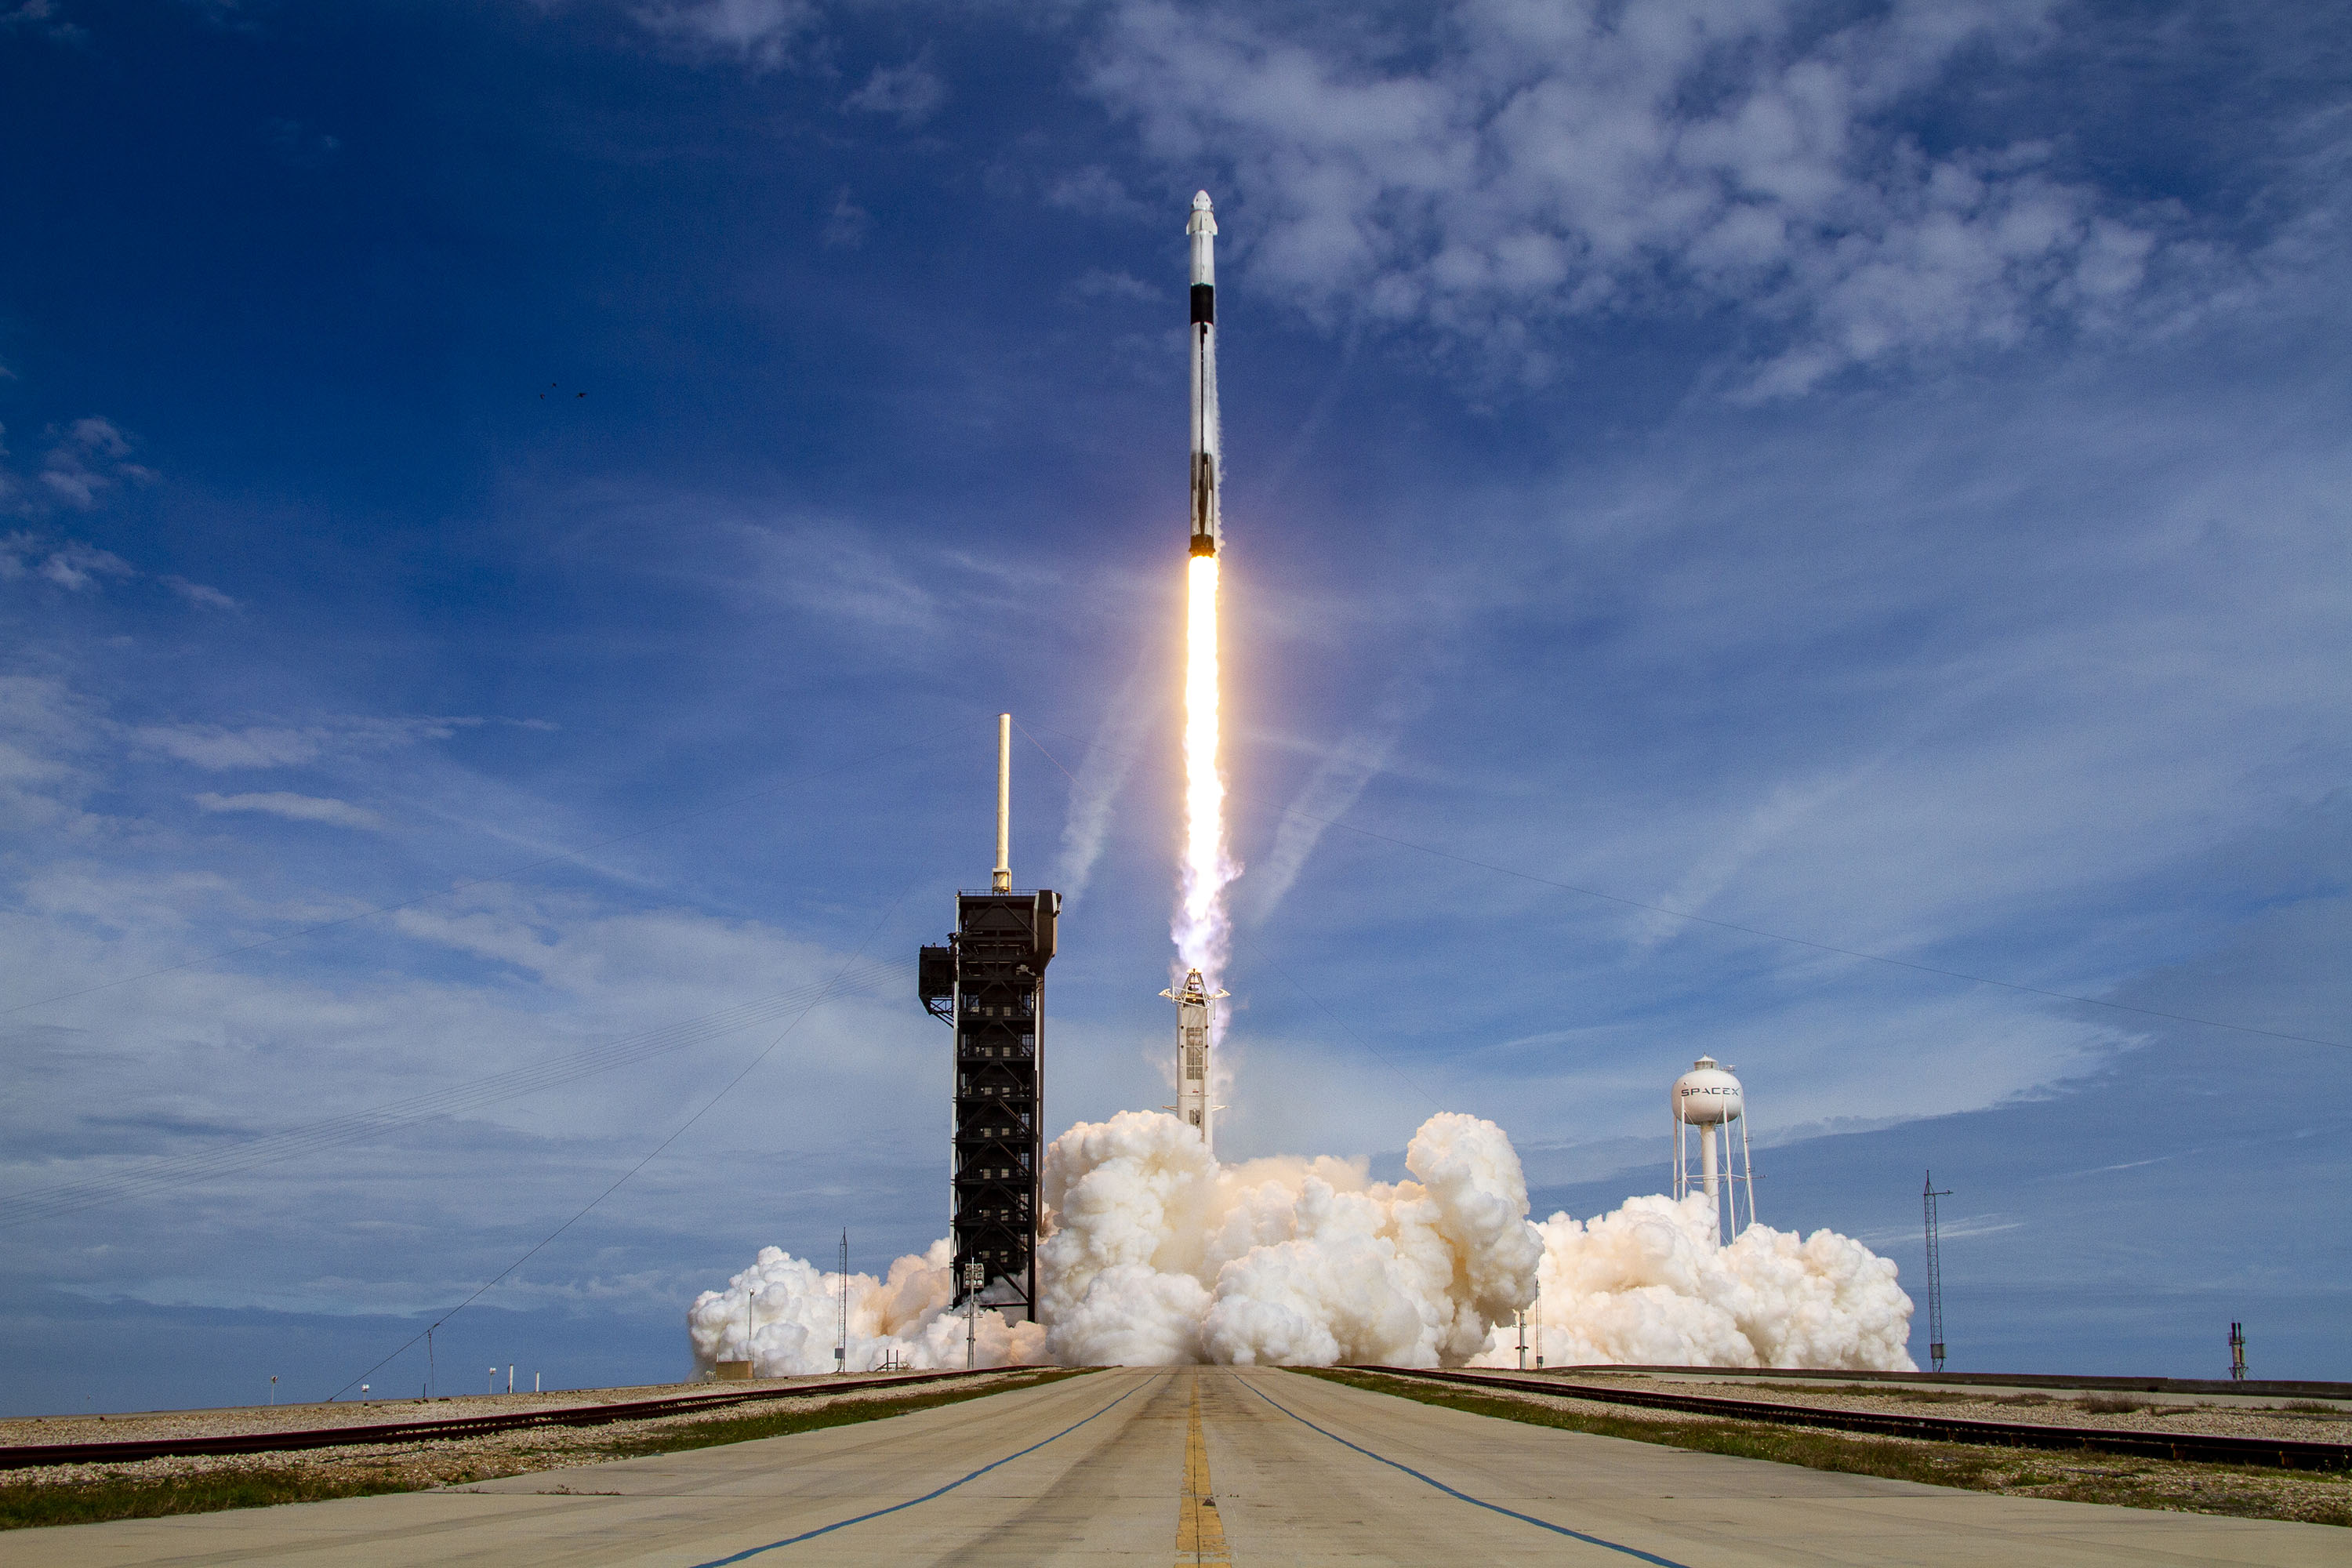 Falcon 9 Crew Dragon In Flight Abort Test